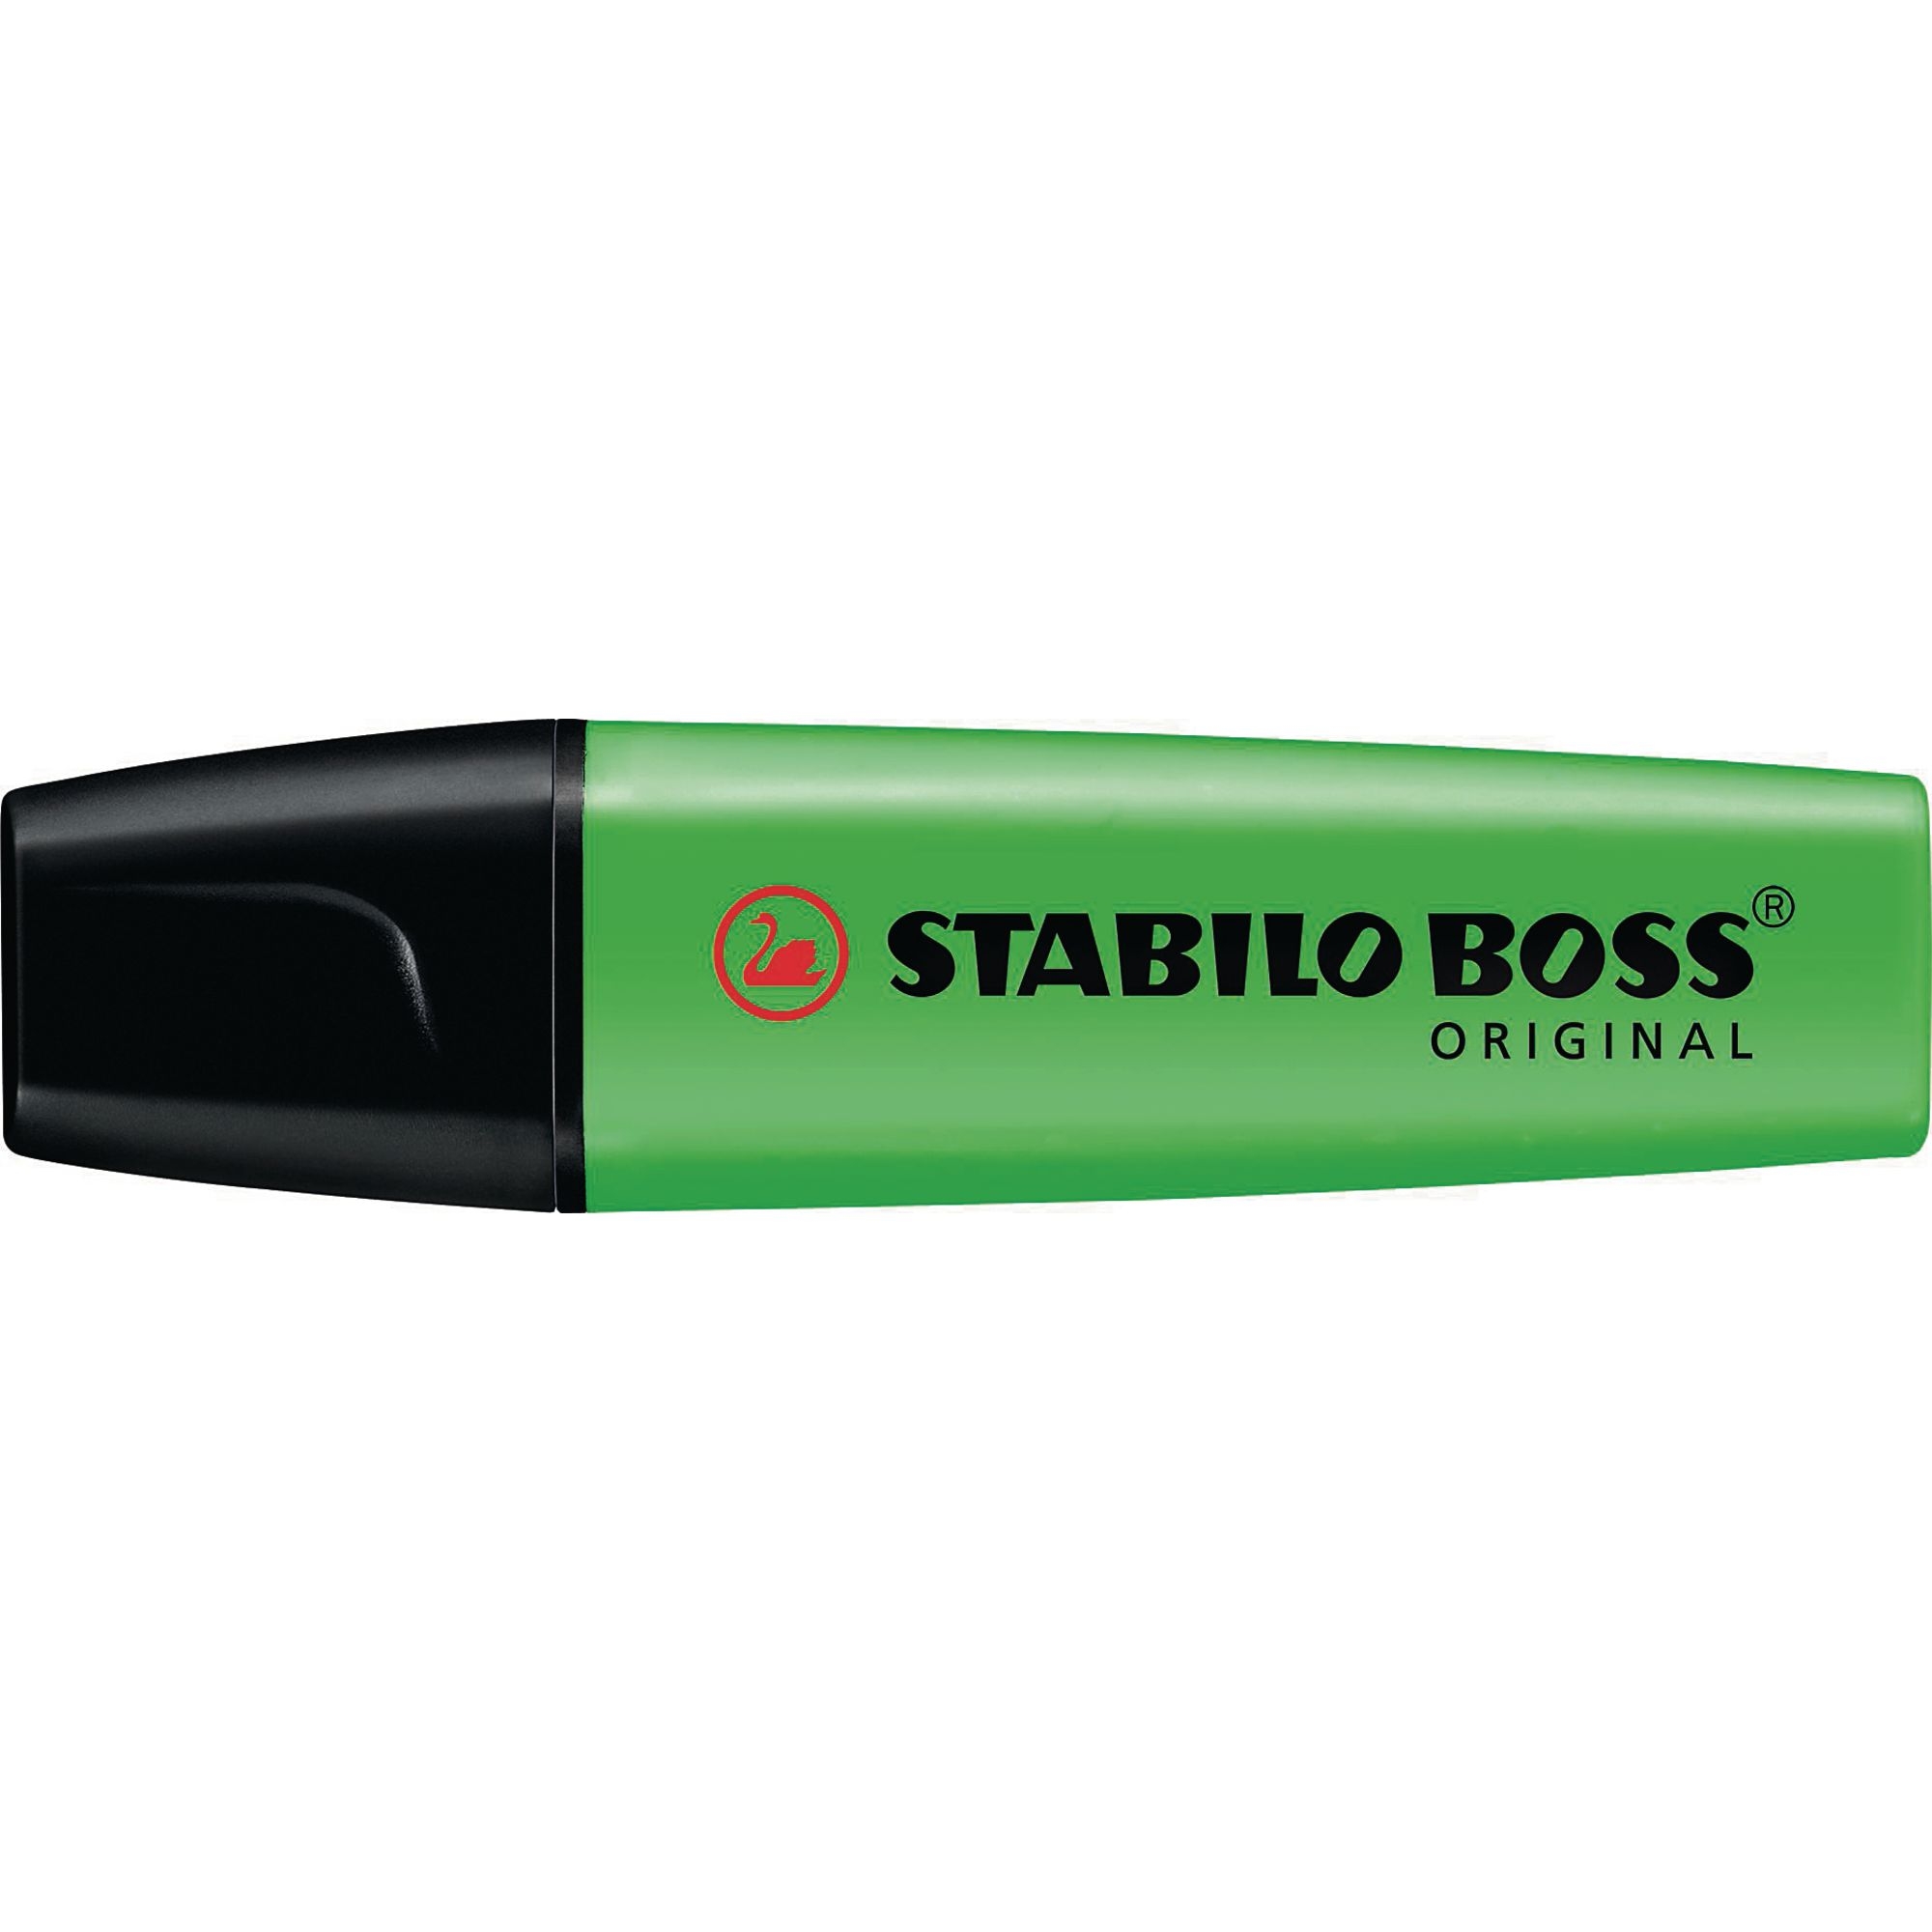 Stabilo Boss Original Highlighter Green - Pack of 10